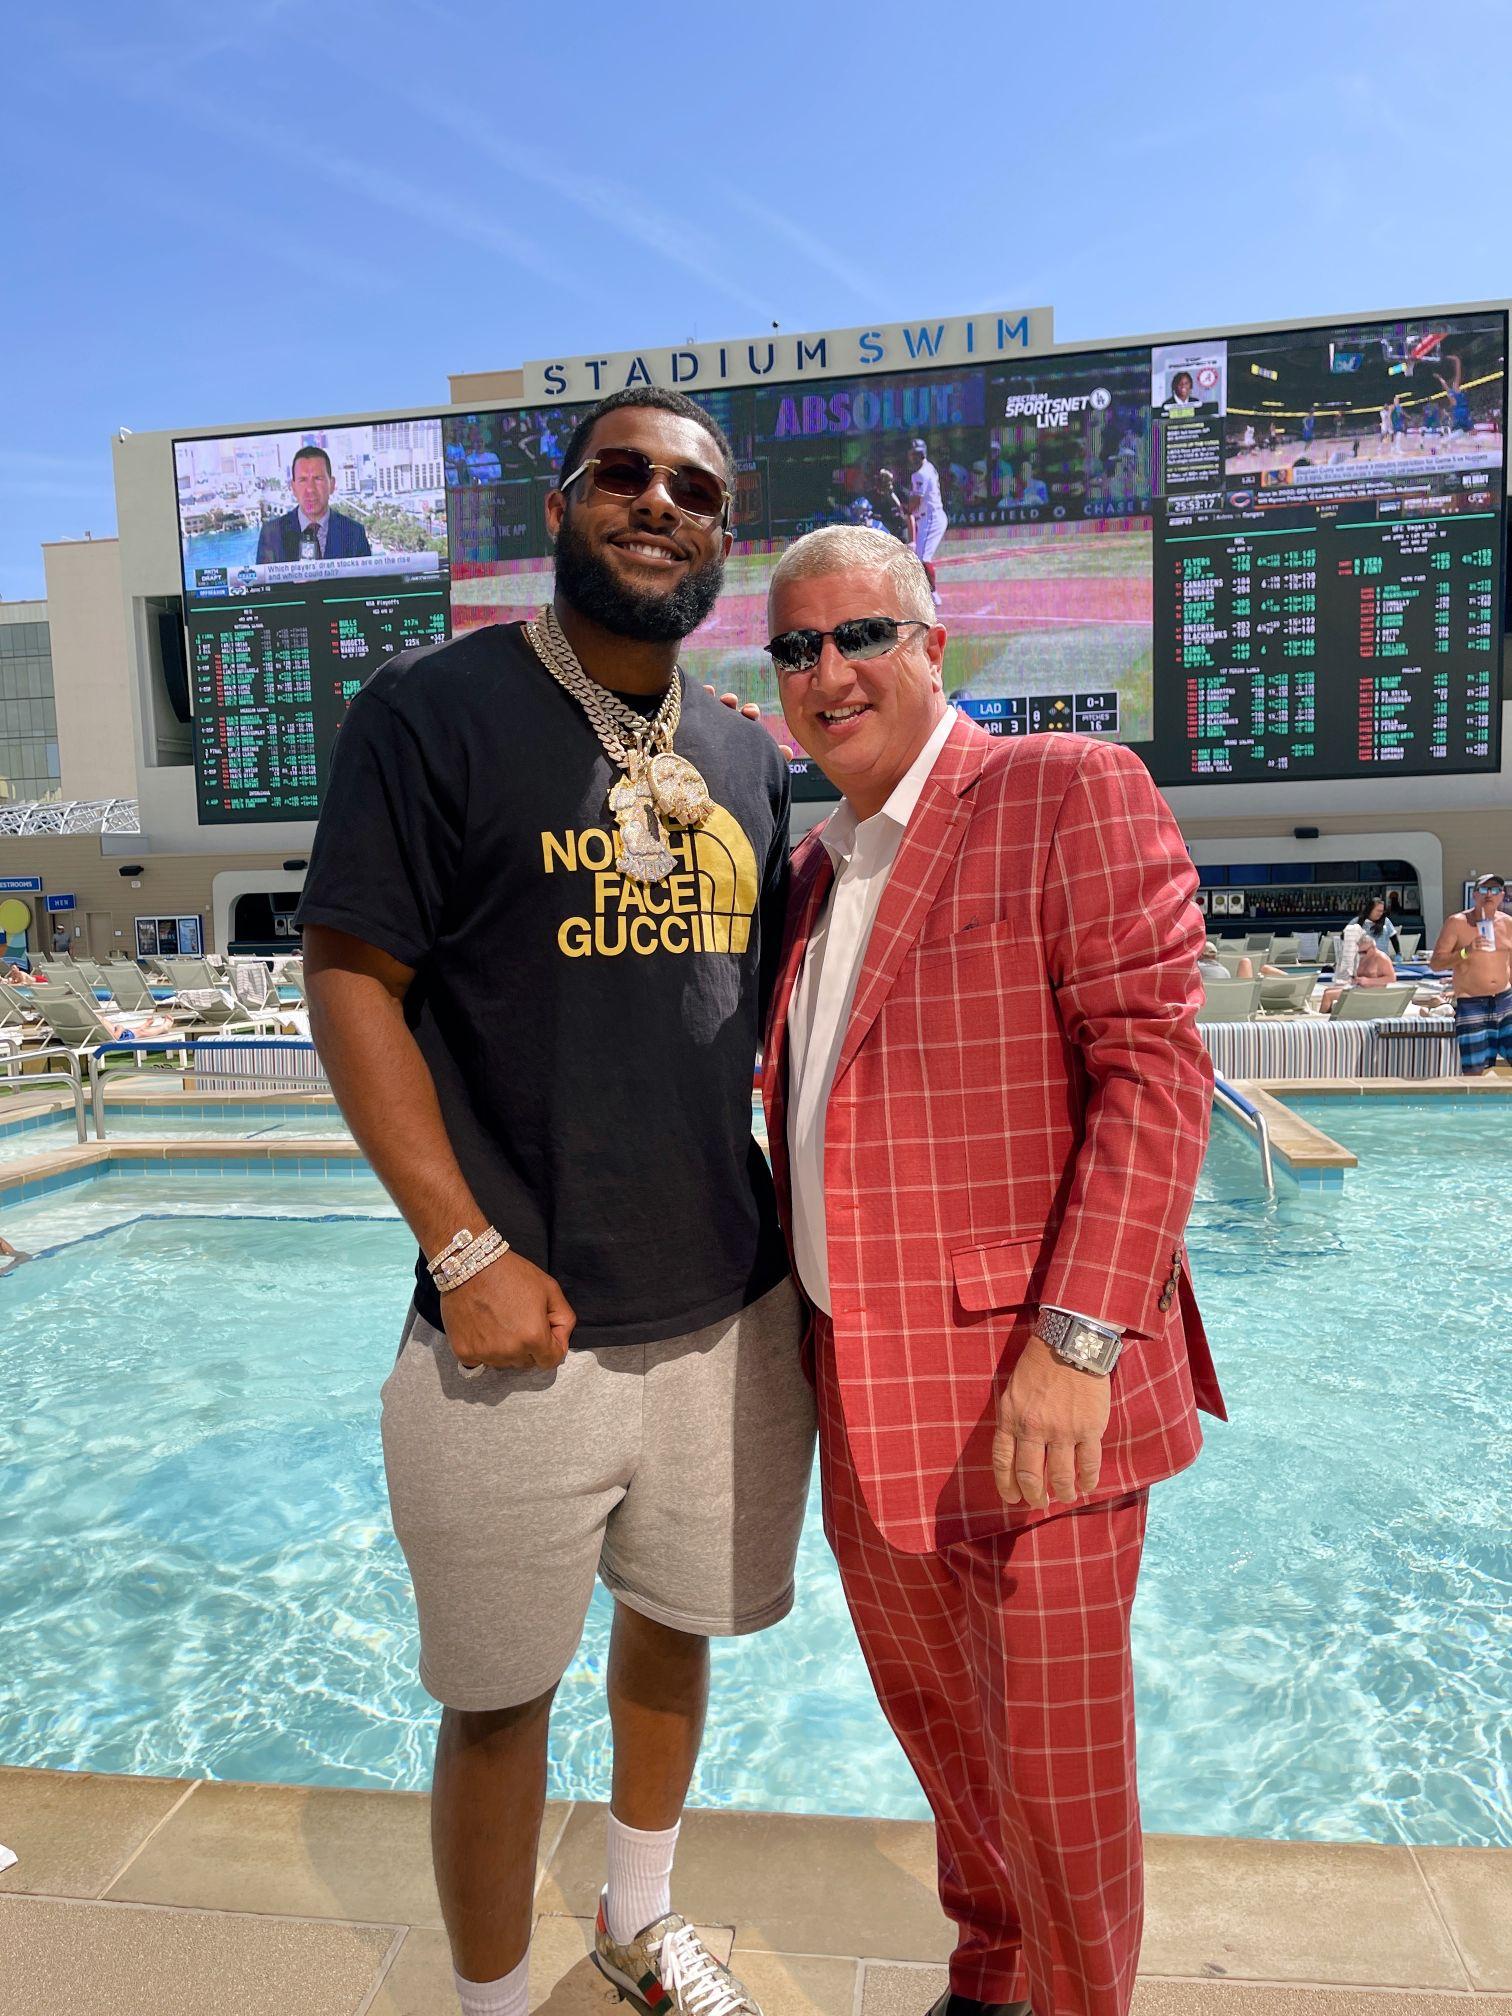 NFL's Top Draft Pick Kayvon Thibodeaux Parties It Up In Downtown Las Vegas!